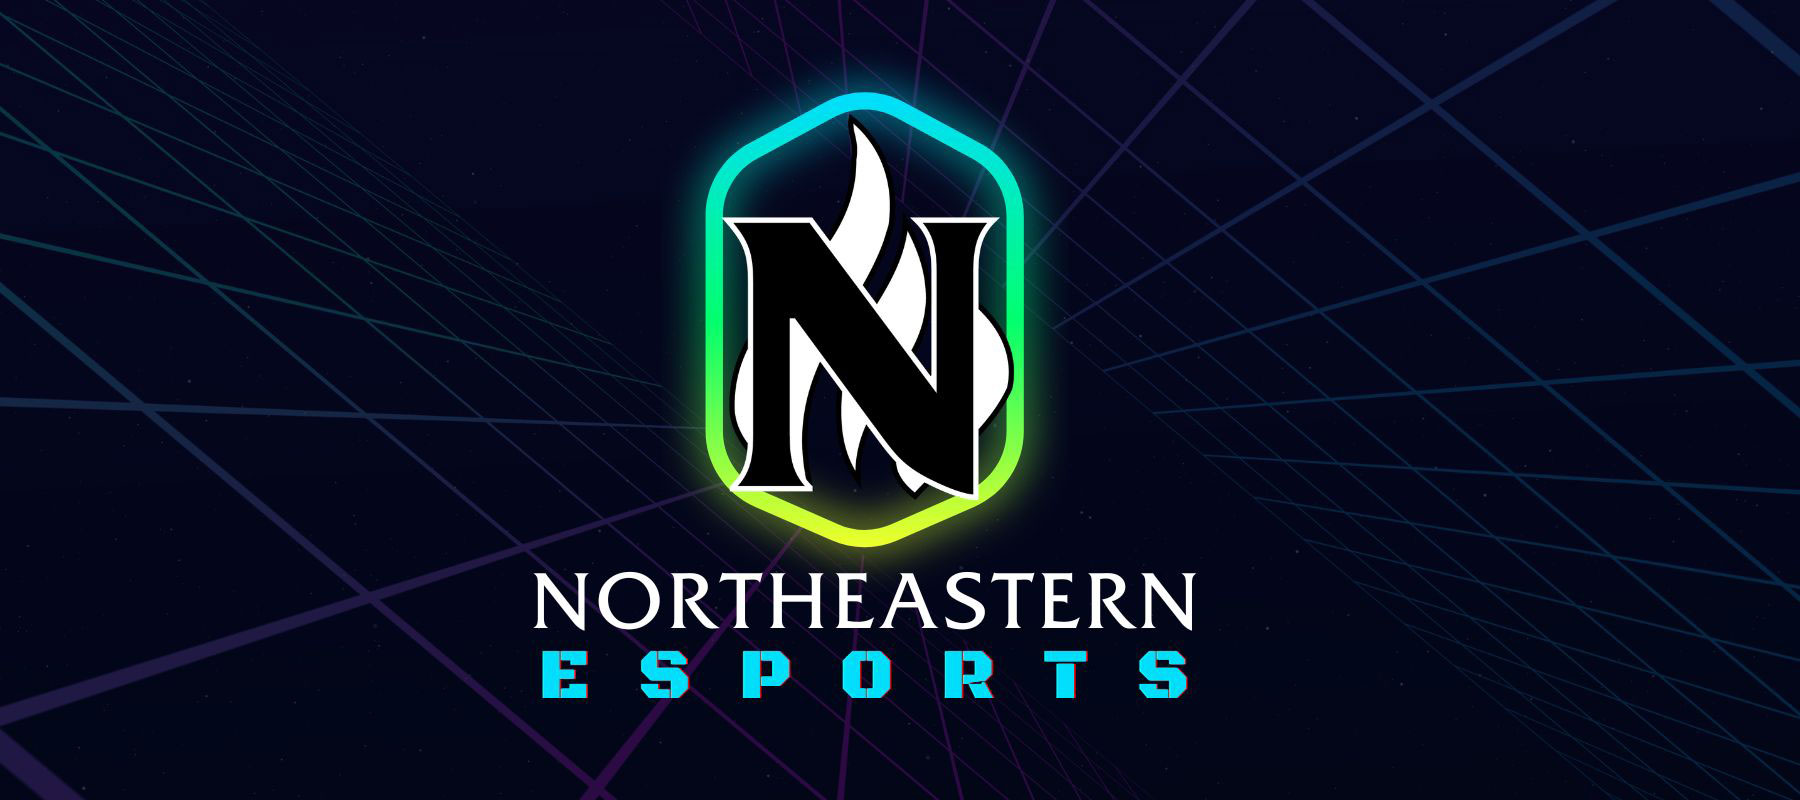 Northeastern esports logo